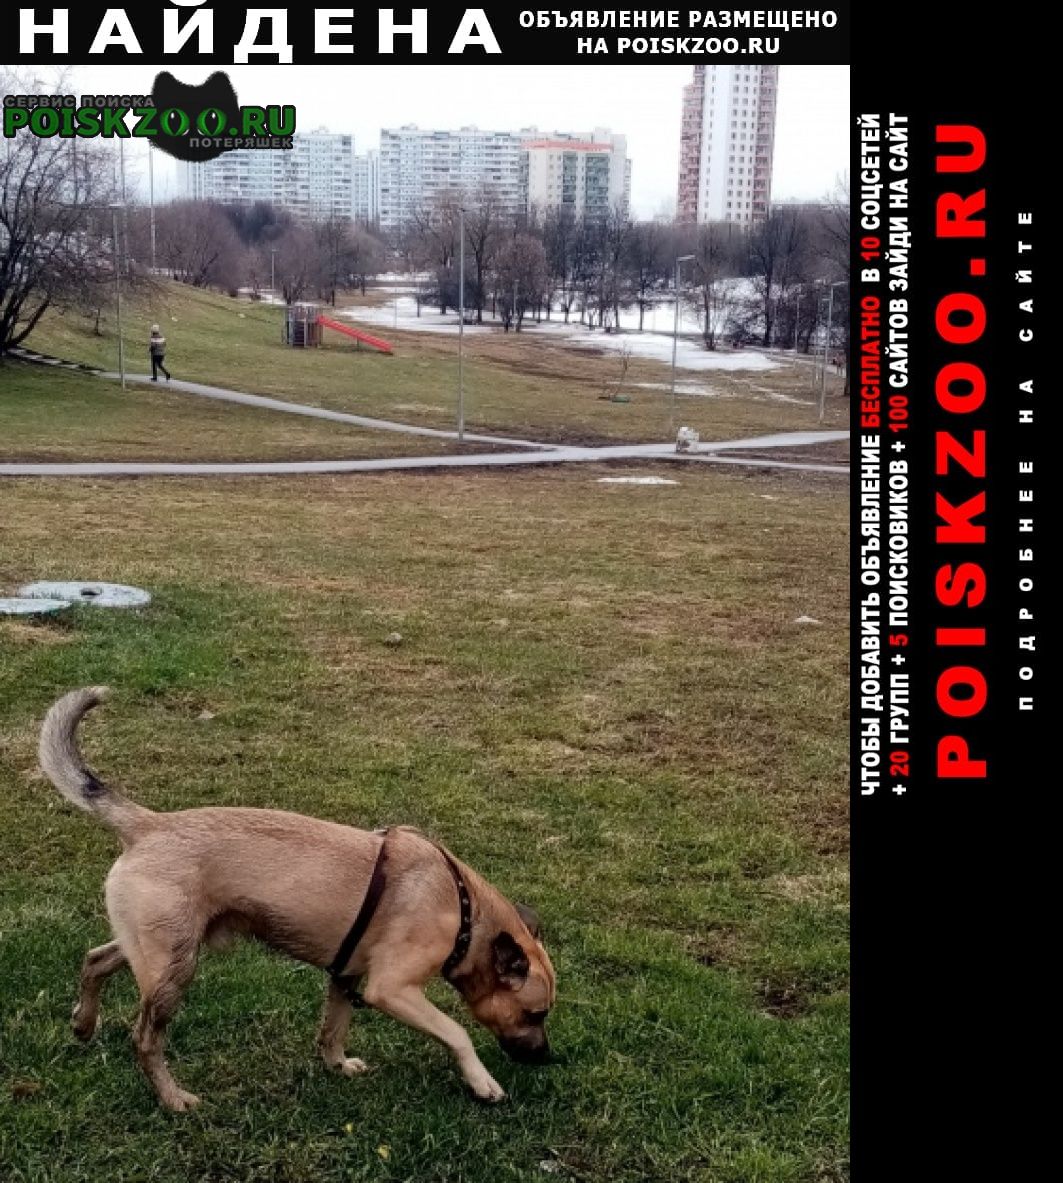 Москва Найдена собака кобель 10 апреля 11:30 утра